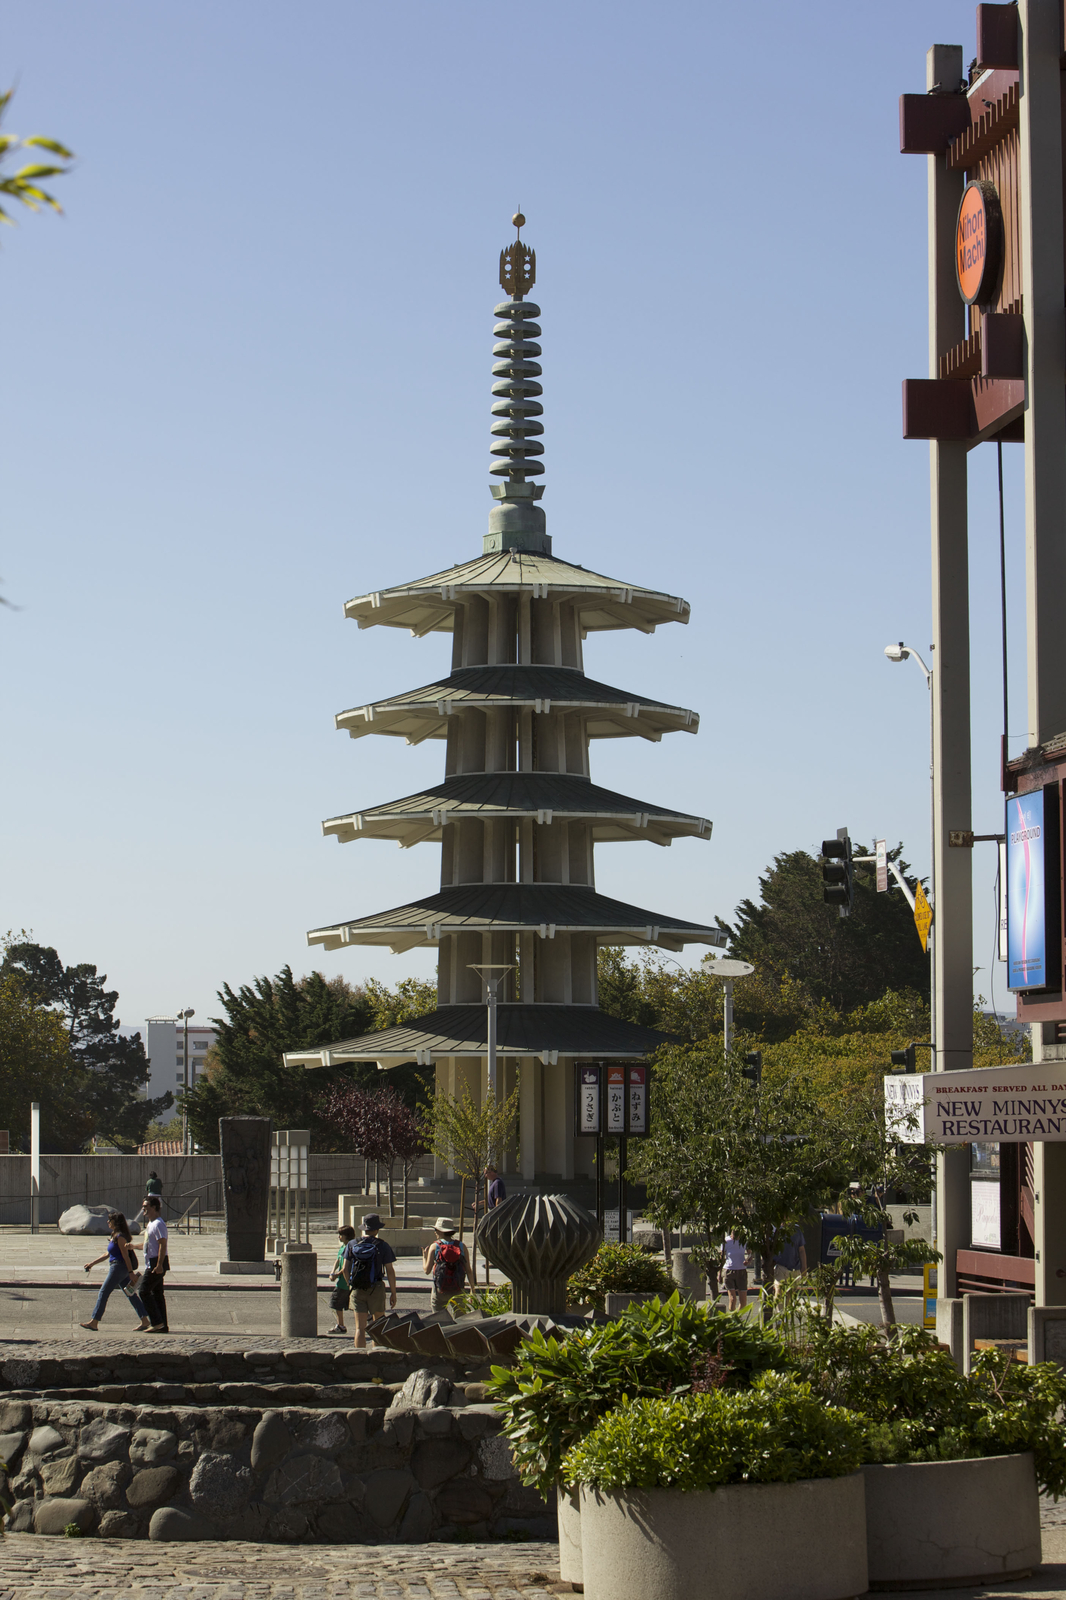 Japantown Pagoda San Francisco Travel Association photo.